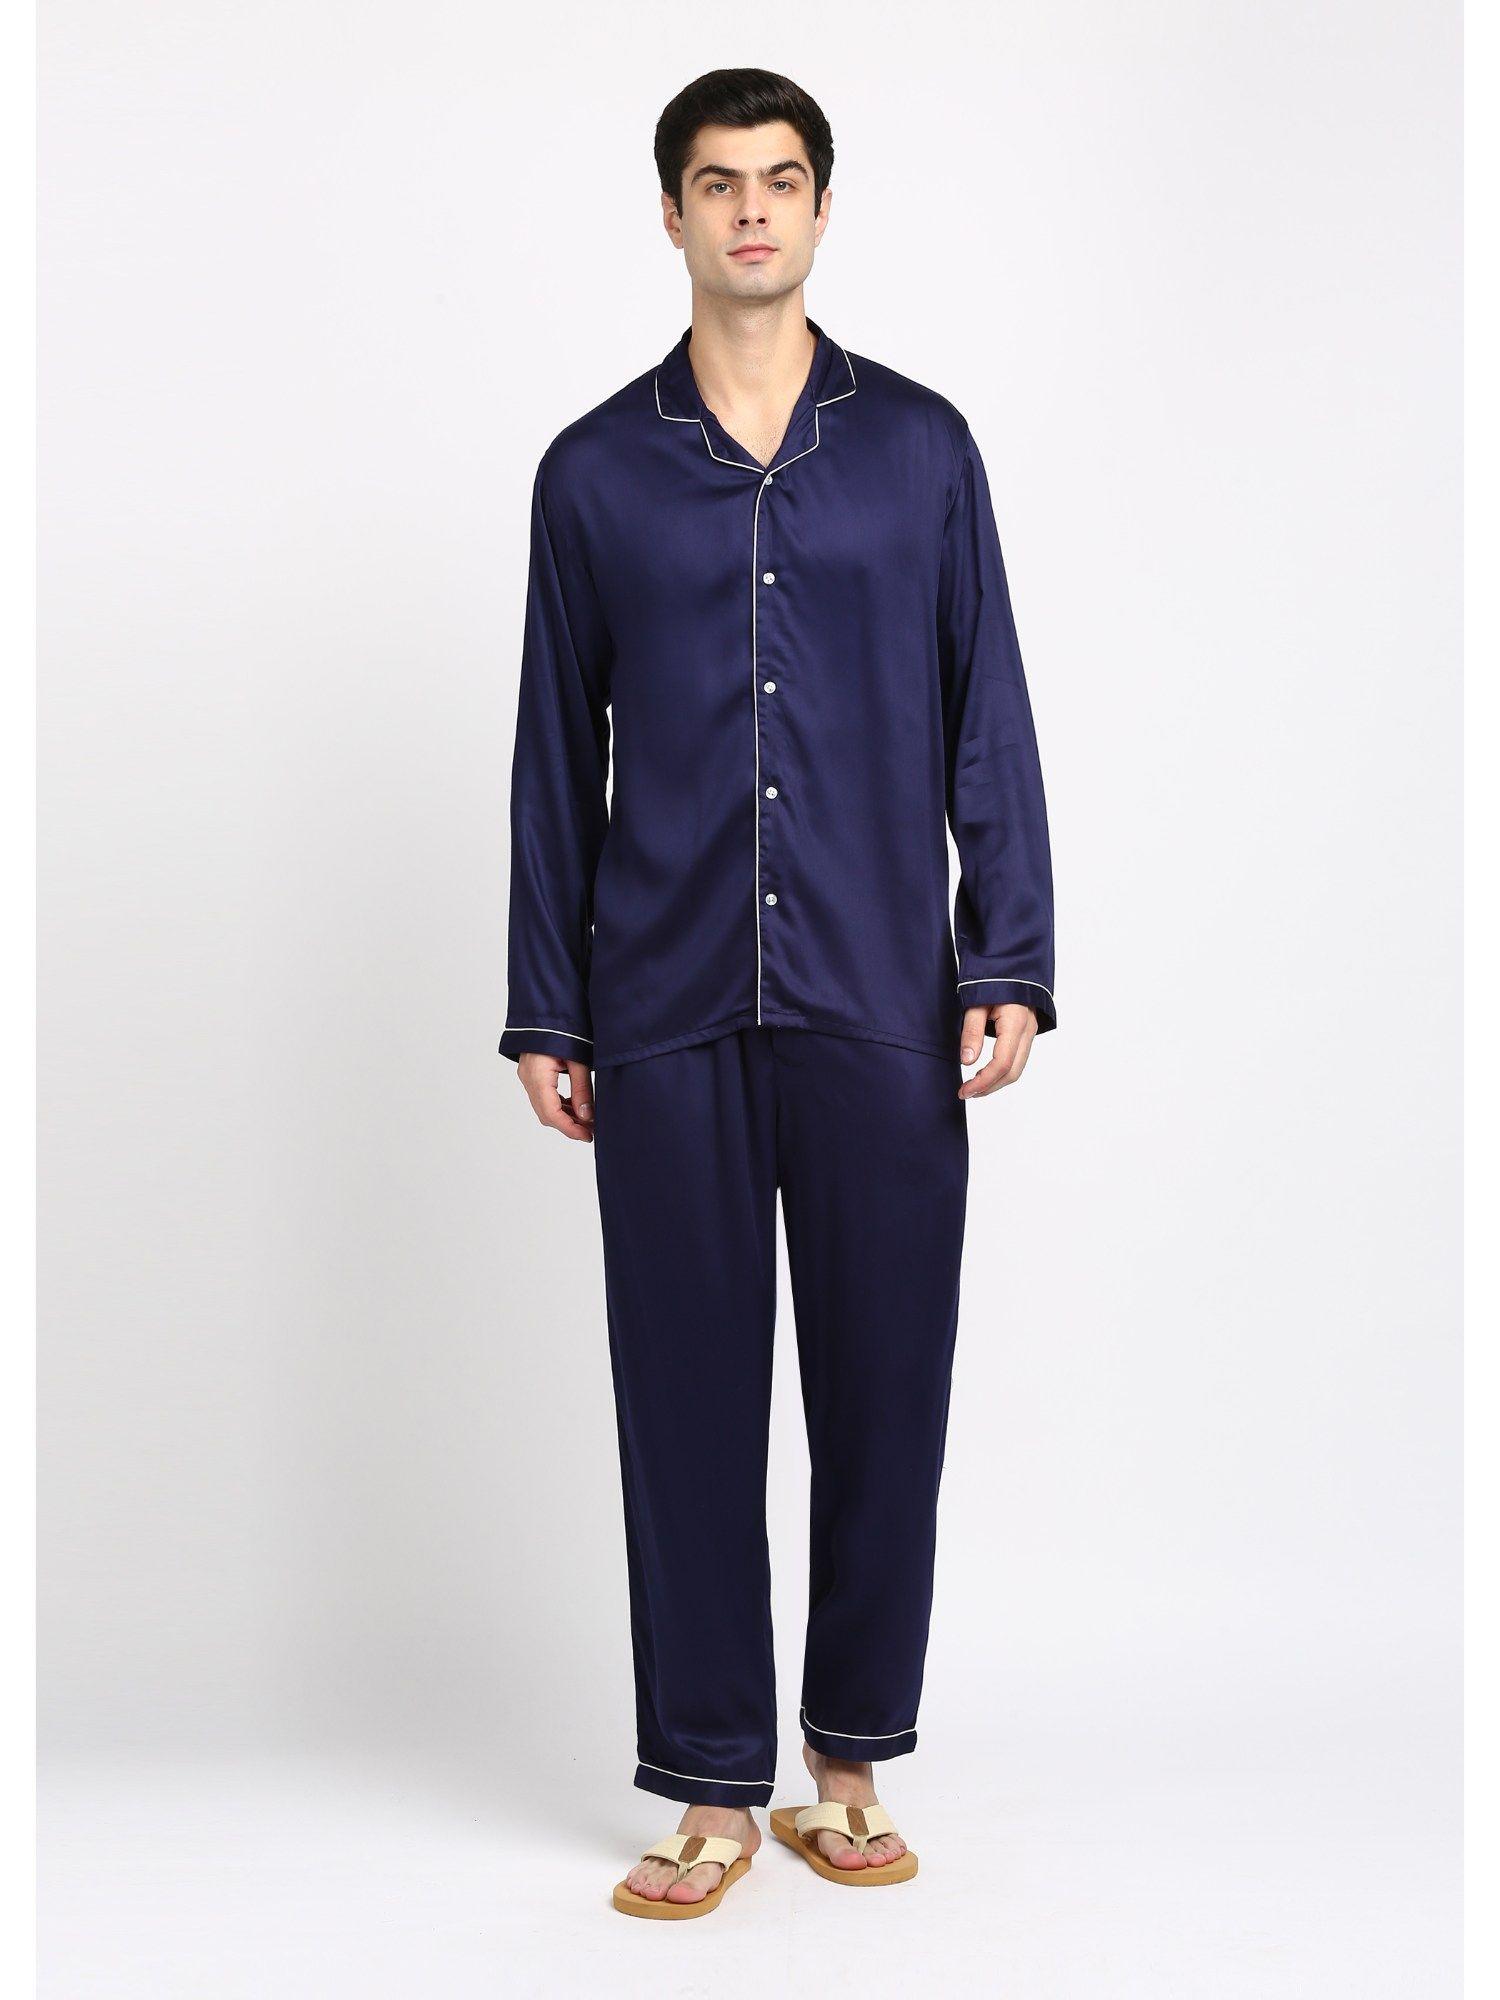 ultra soft navy blue modal satin long sleeve men night suit (set of 2)